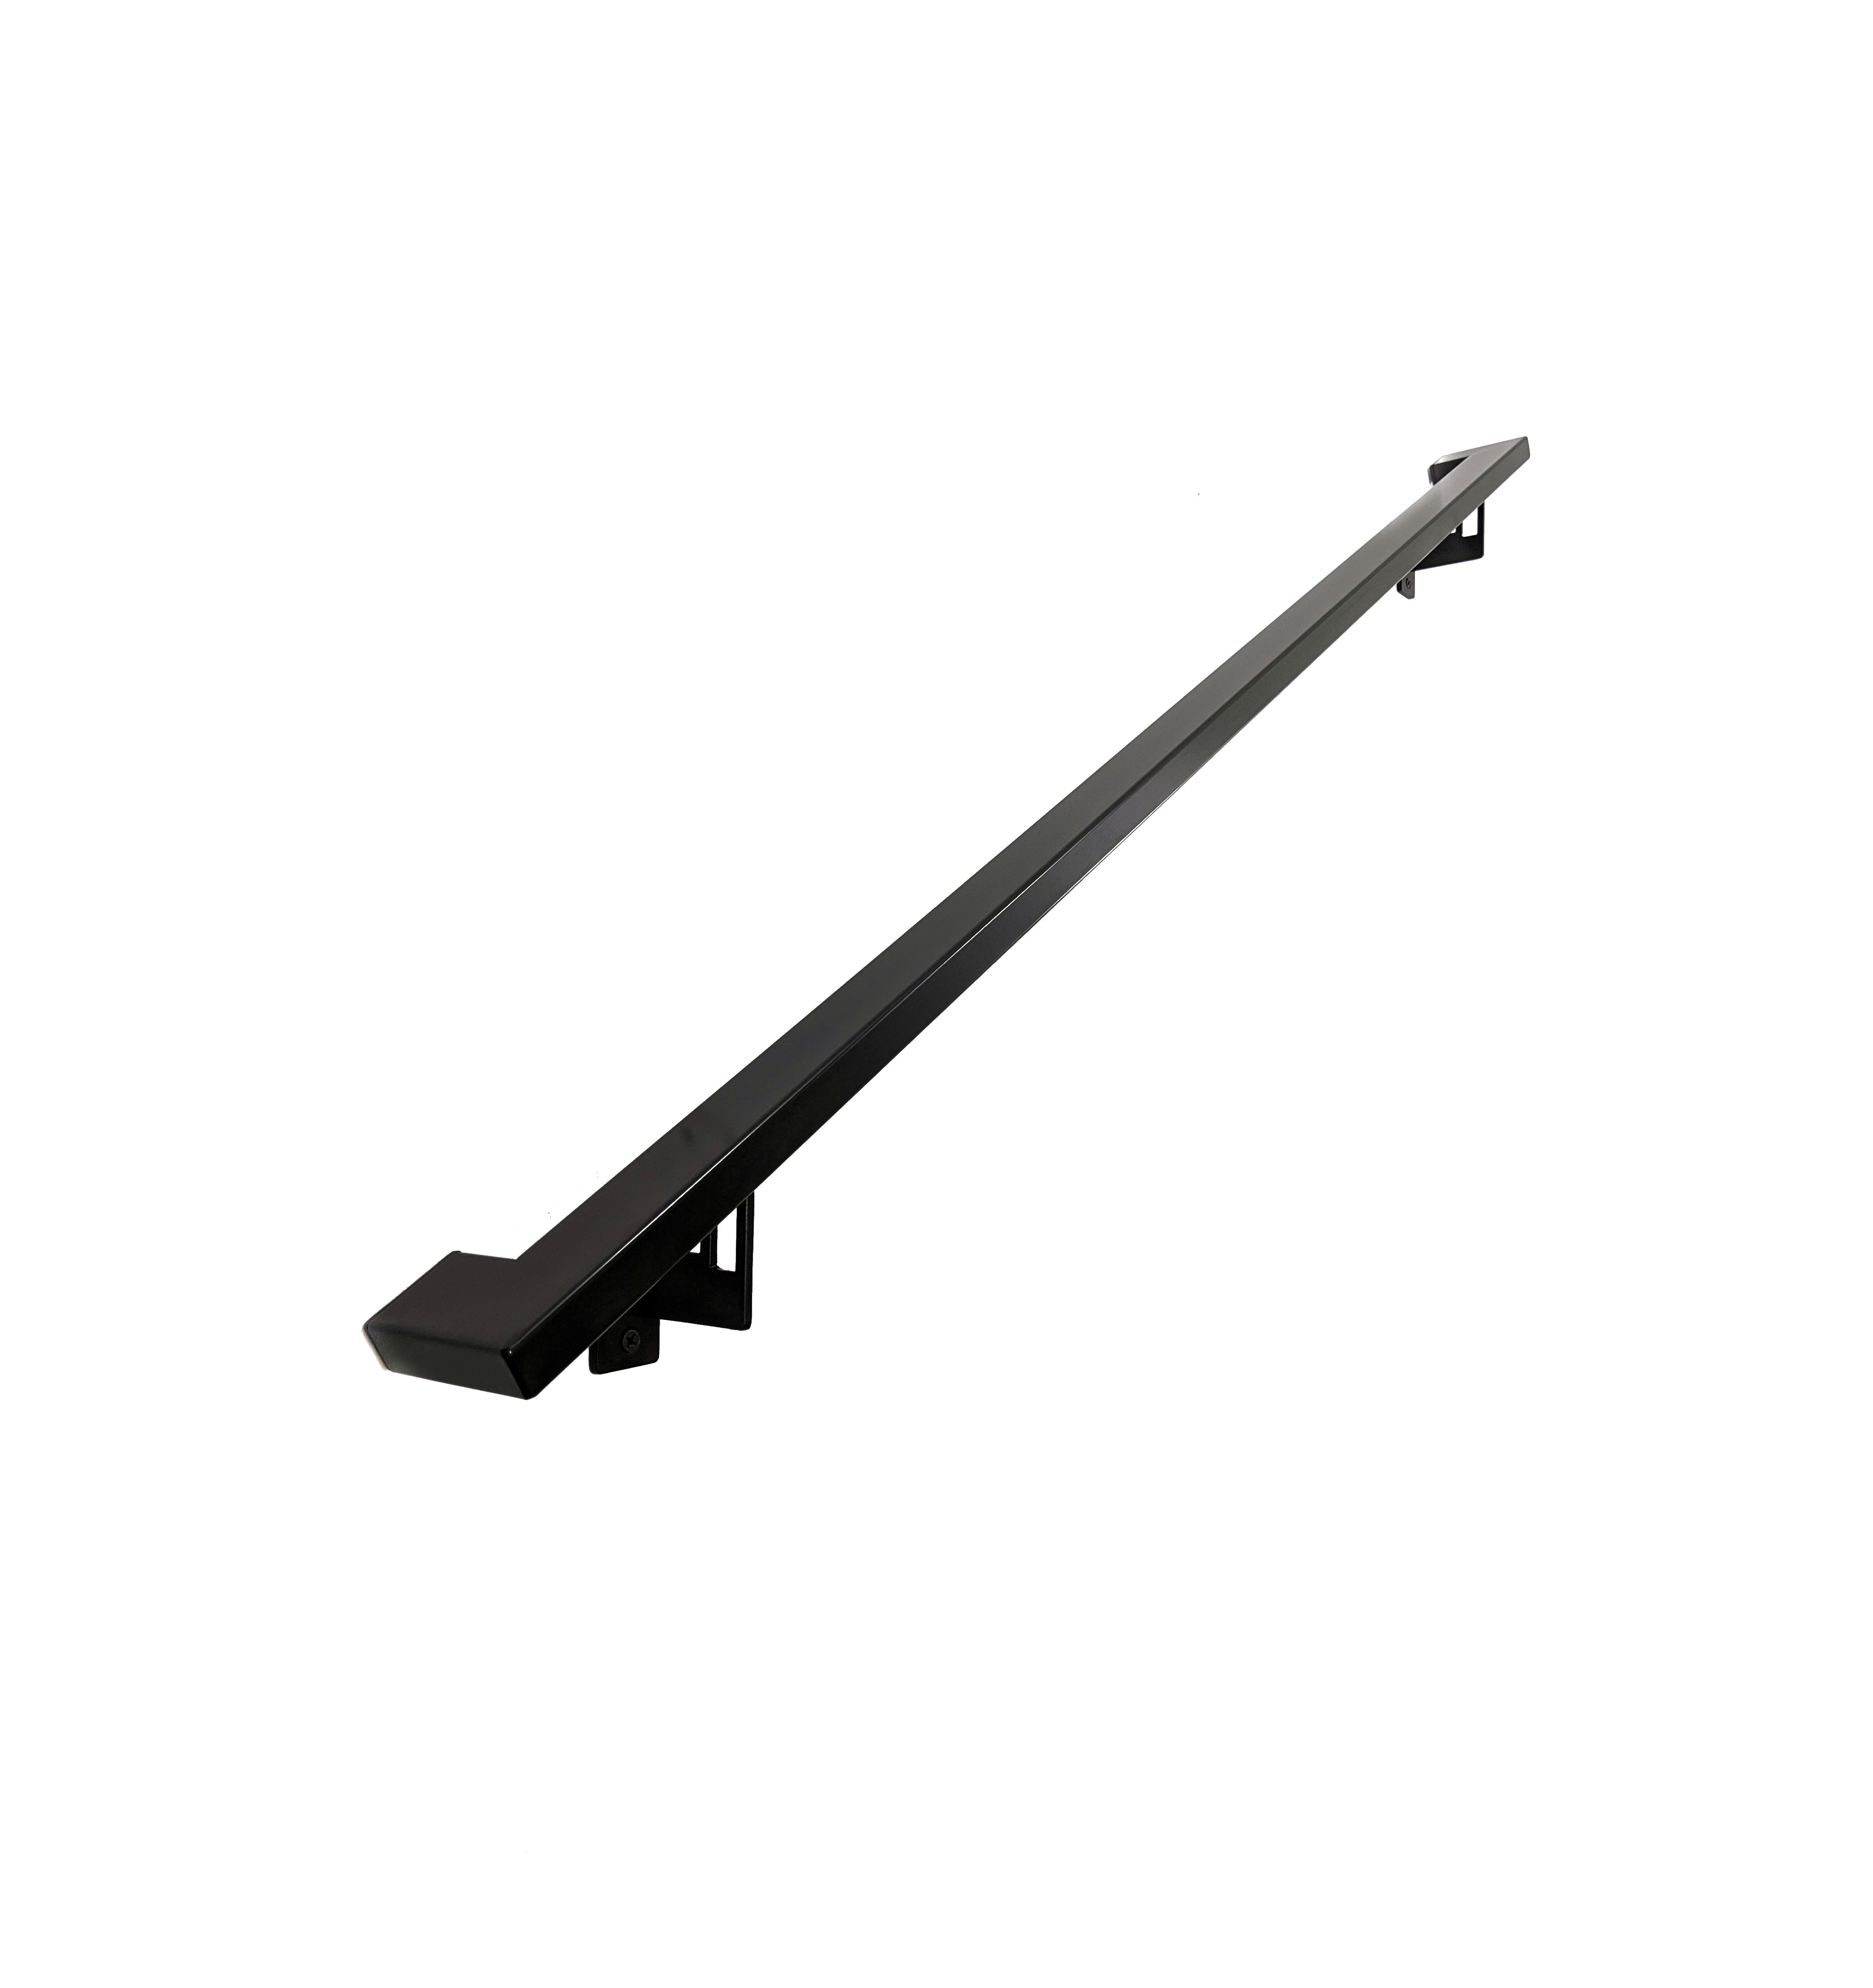 Modern Minimalist High Strength Aluminum Handrail Grab Bar, Brackets Included, Matt Black Powder Coat